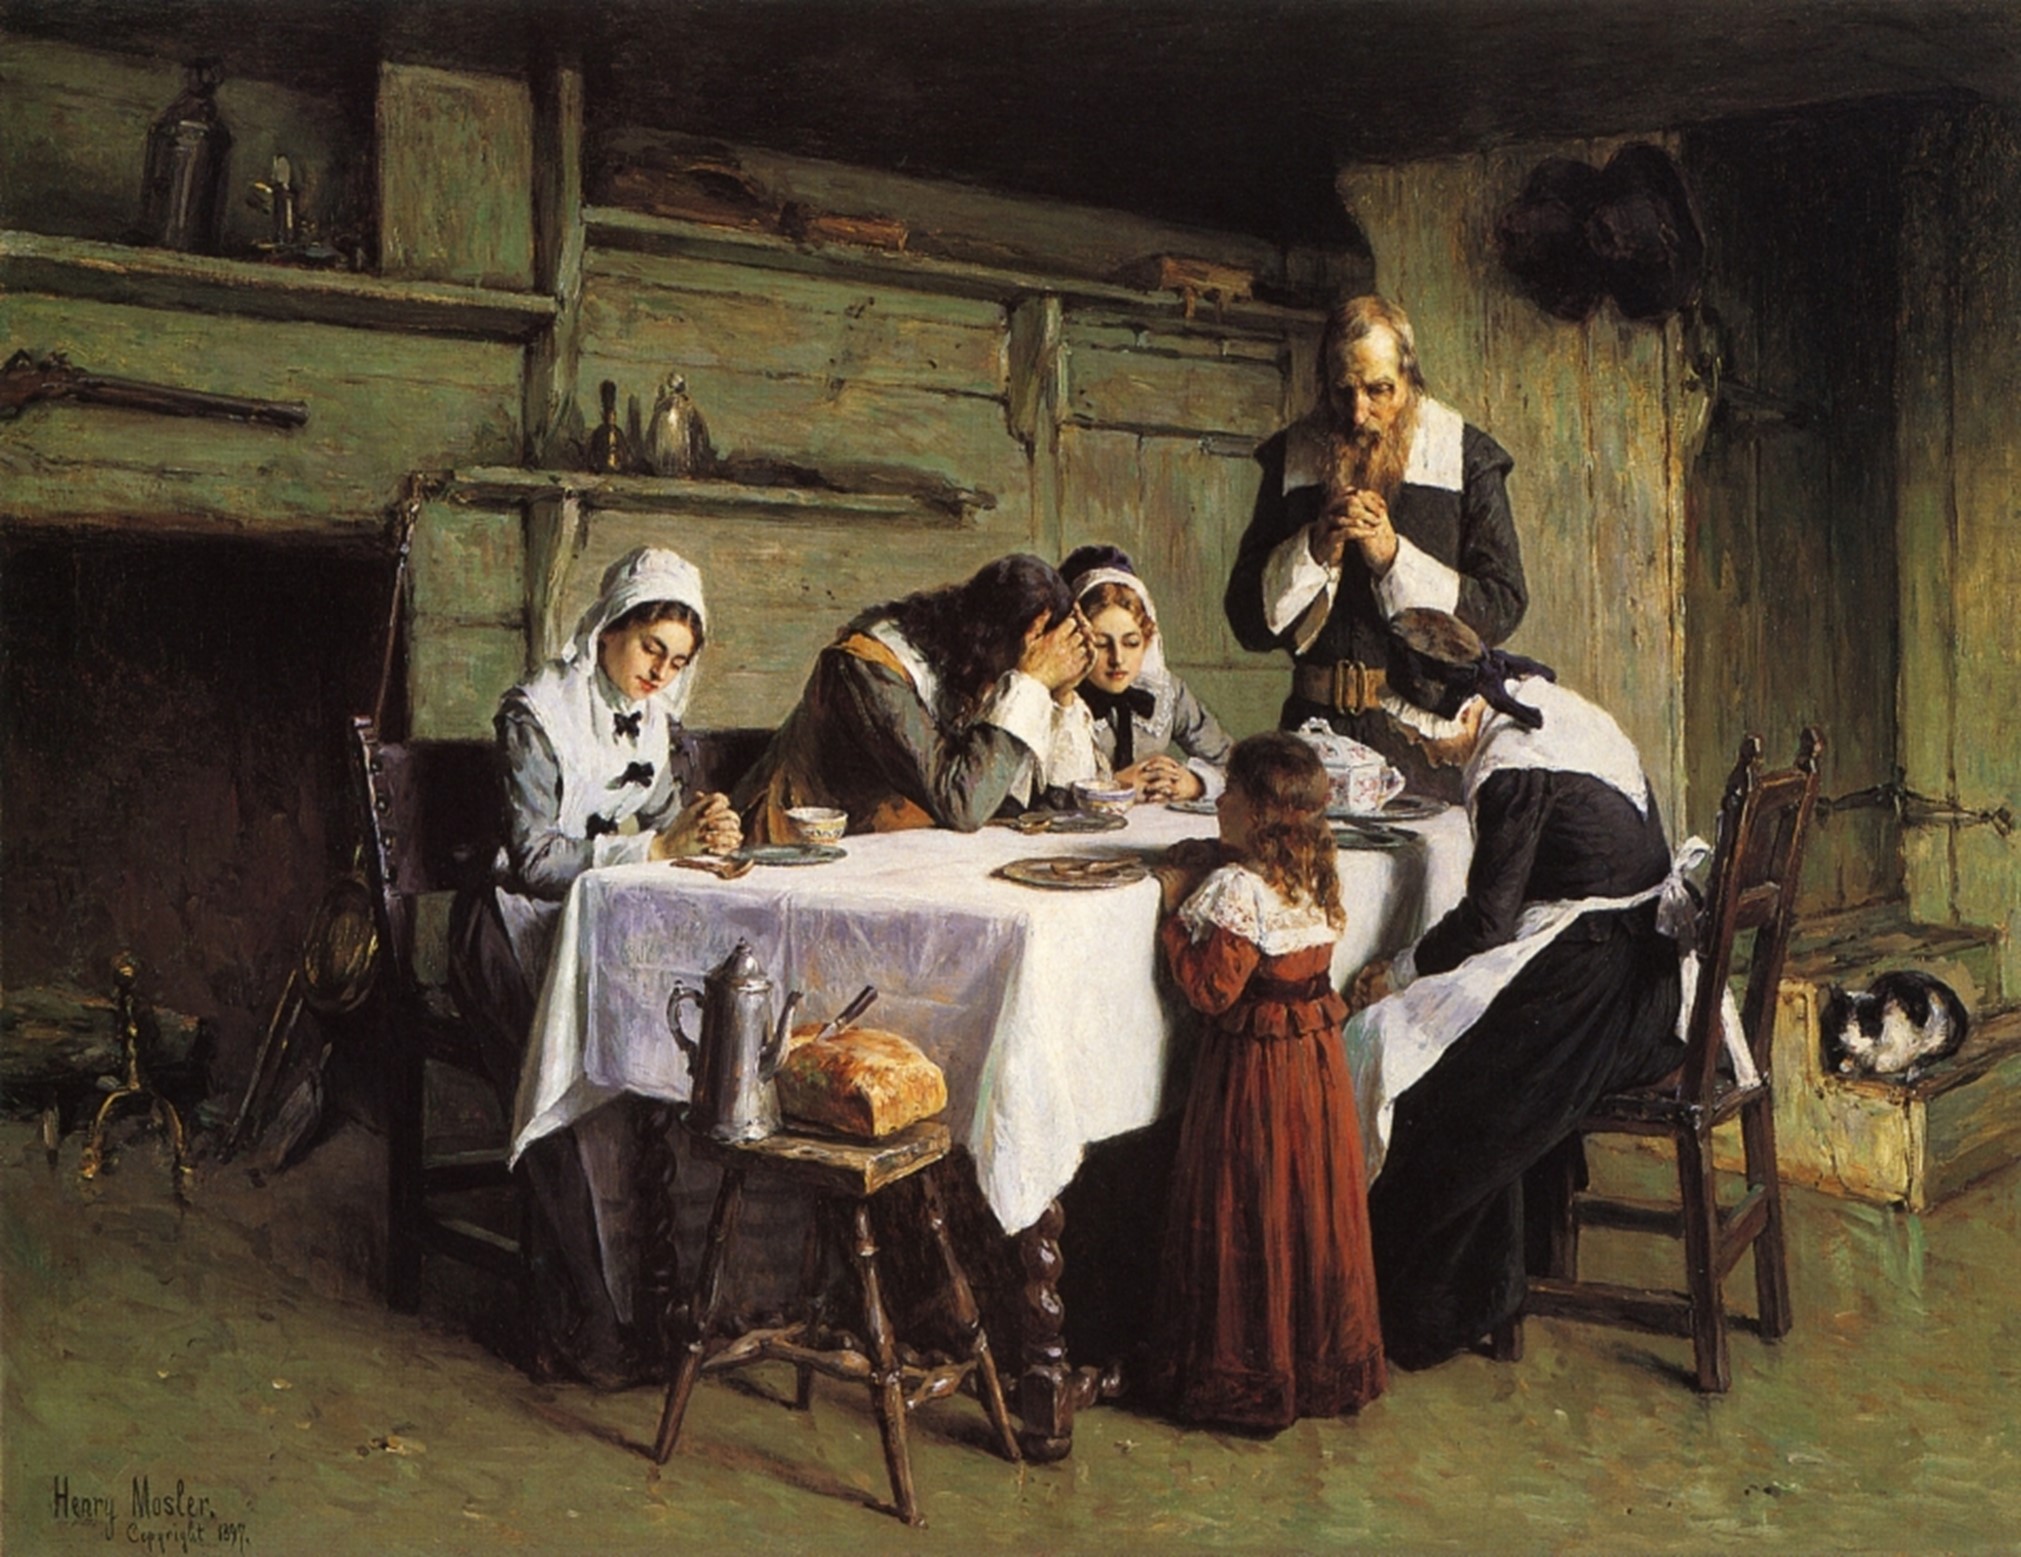 'Pilgrims’ Grace,' by Henry Mosler, 1897. Allentown Art Museum of Lehigh Valley, The Athenaeum.